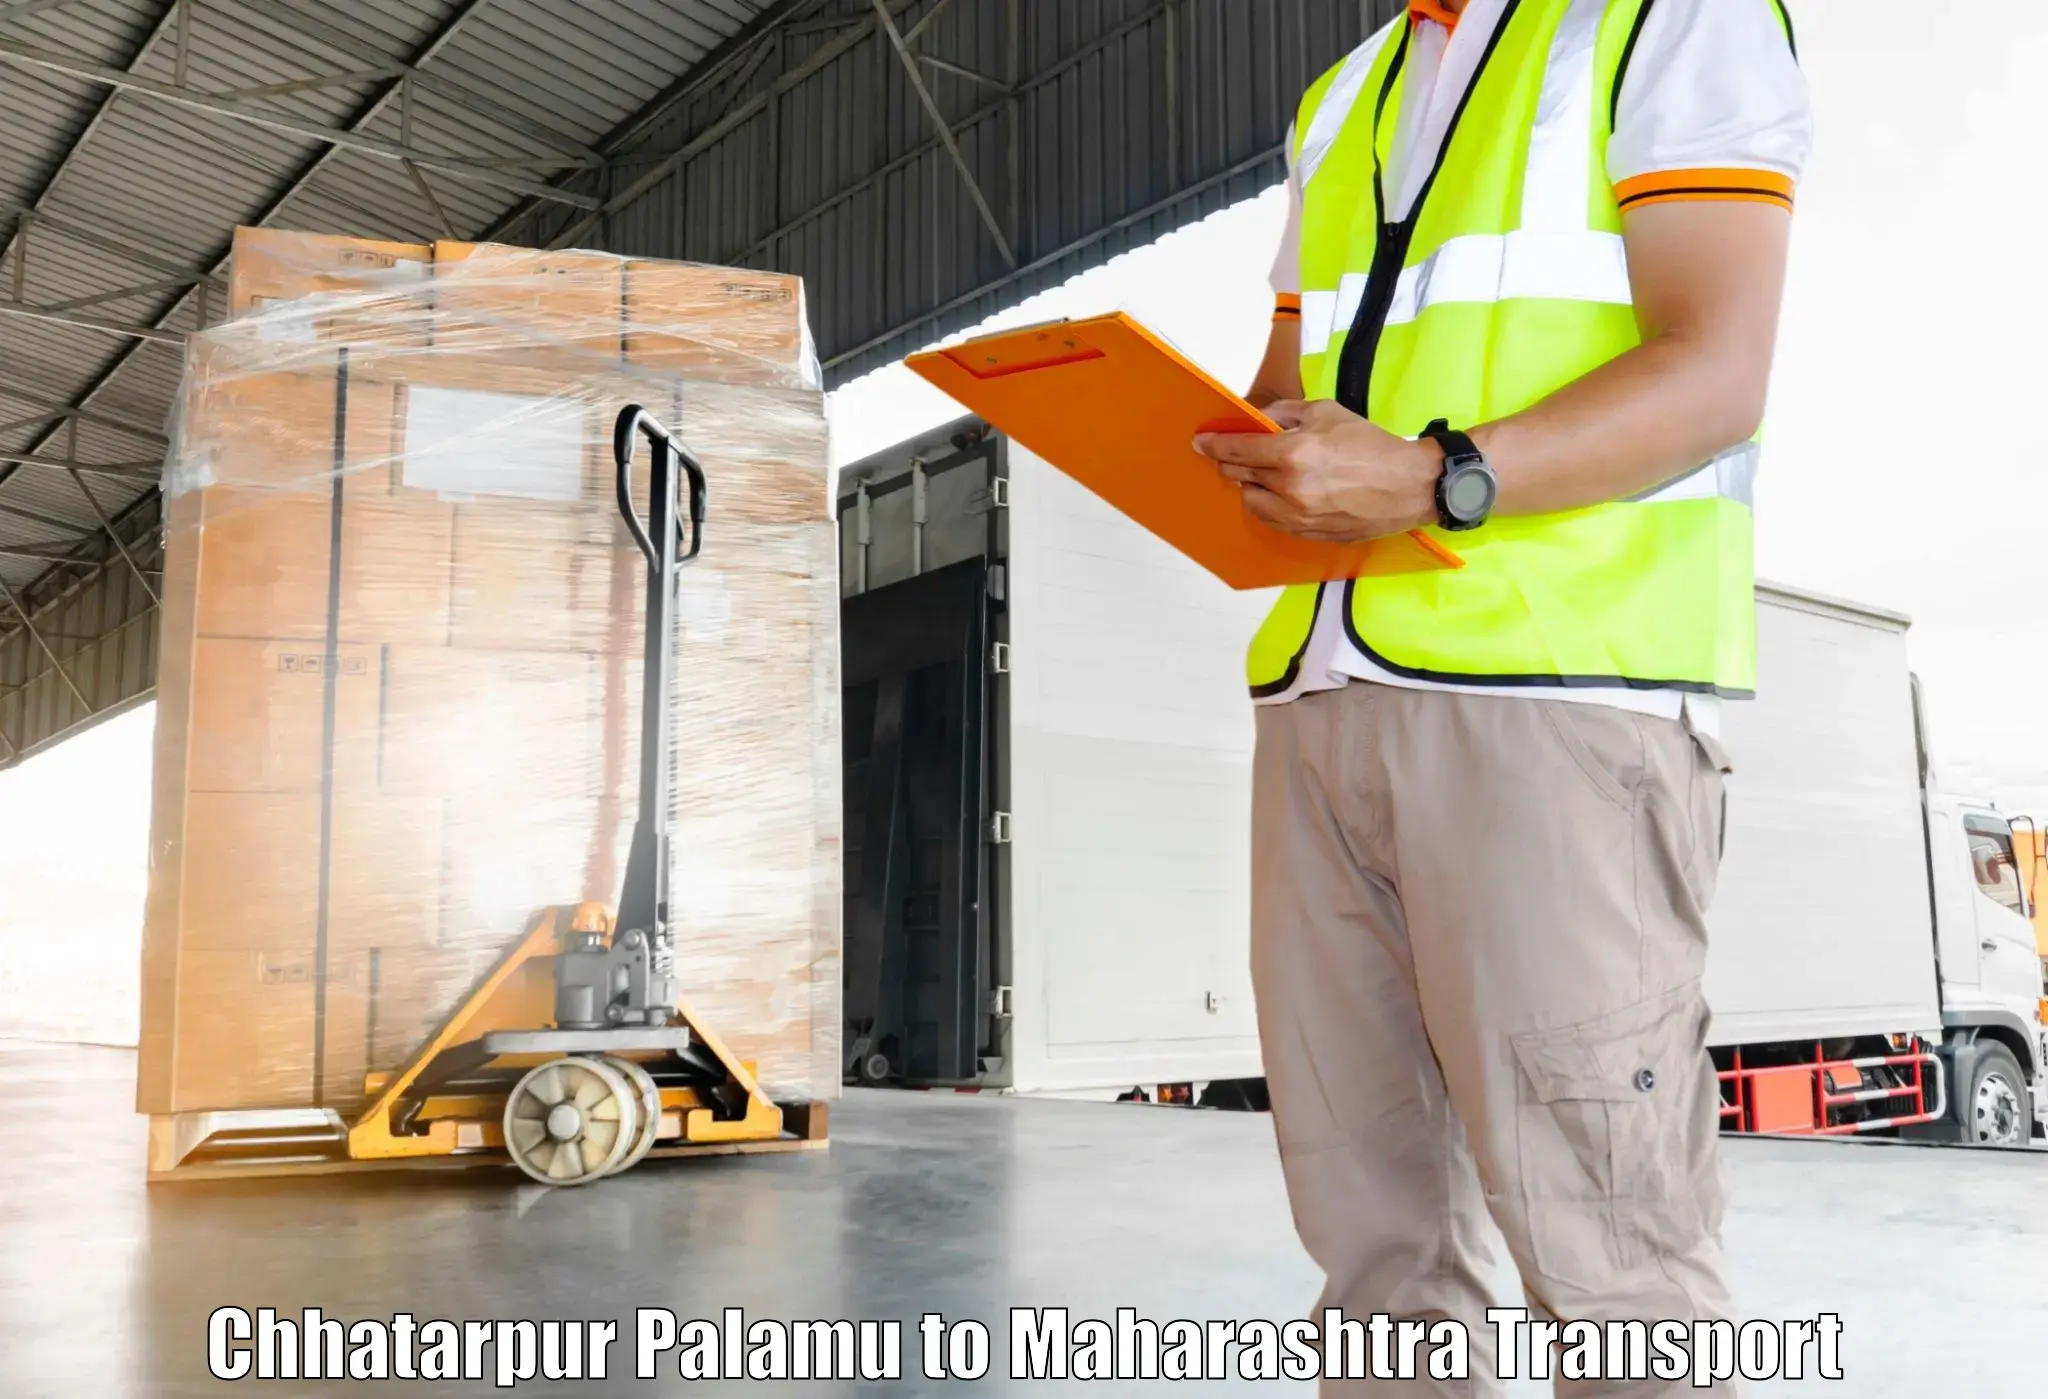 Logistics transportation services in Chhatarpur Palamu to Bhokar